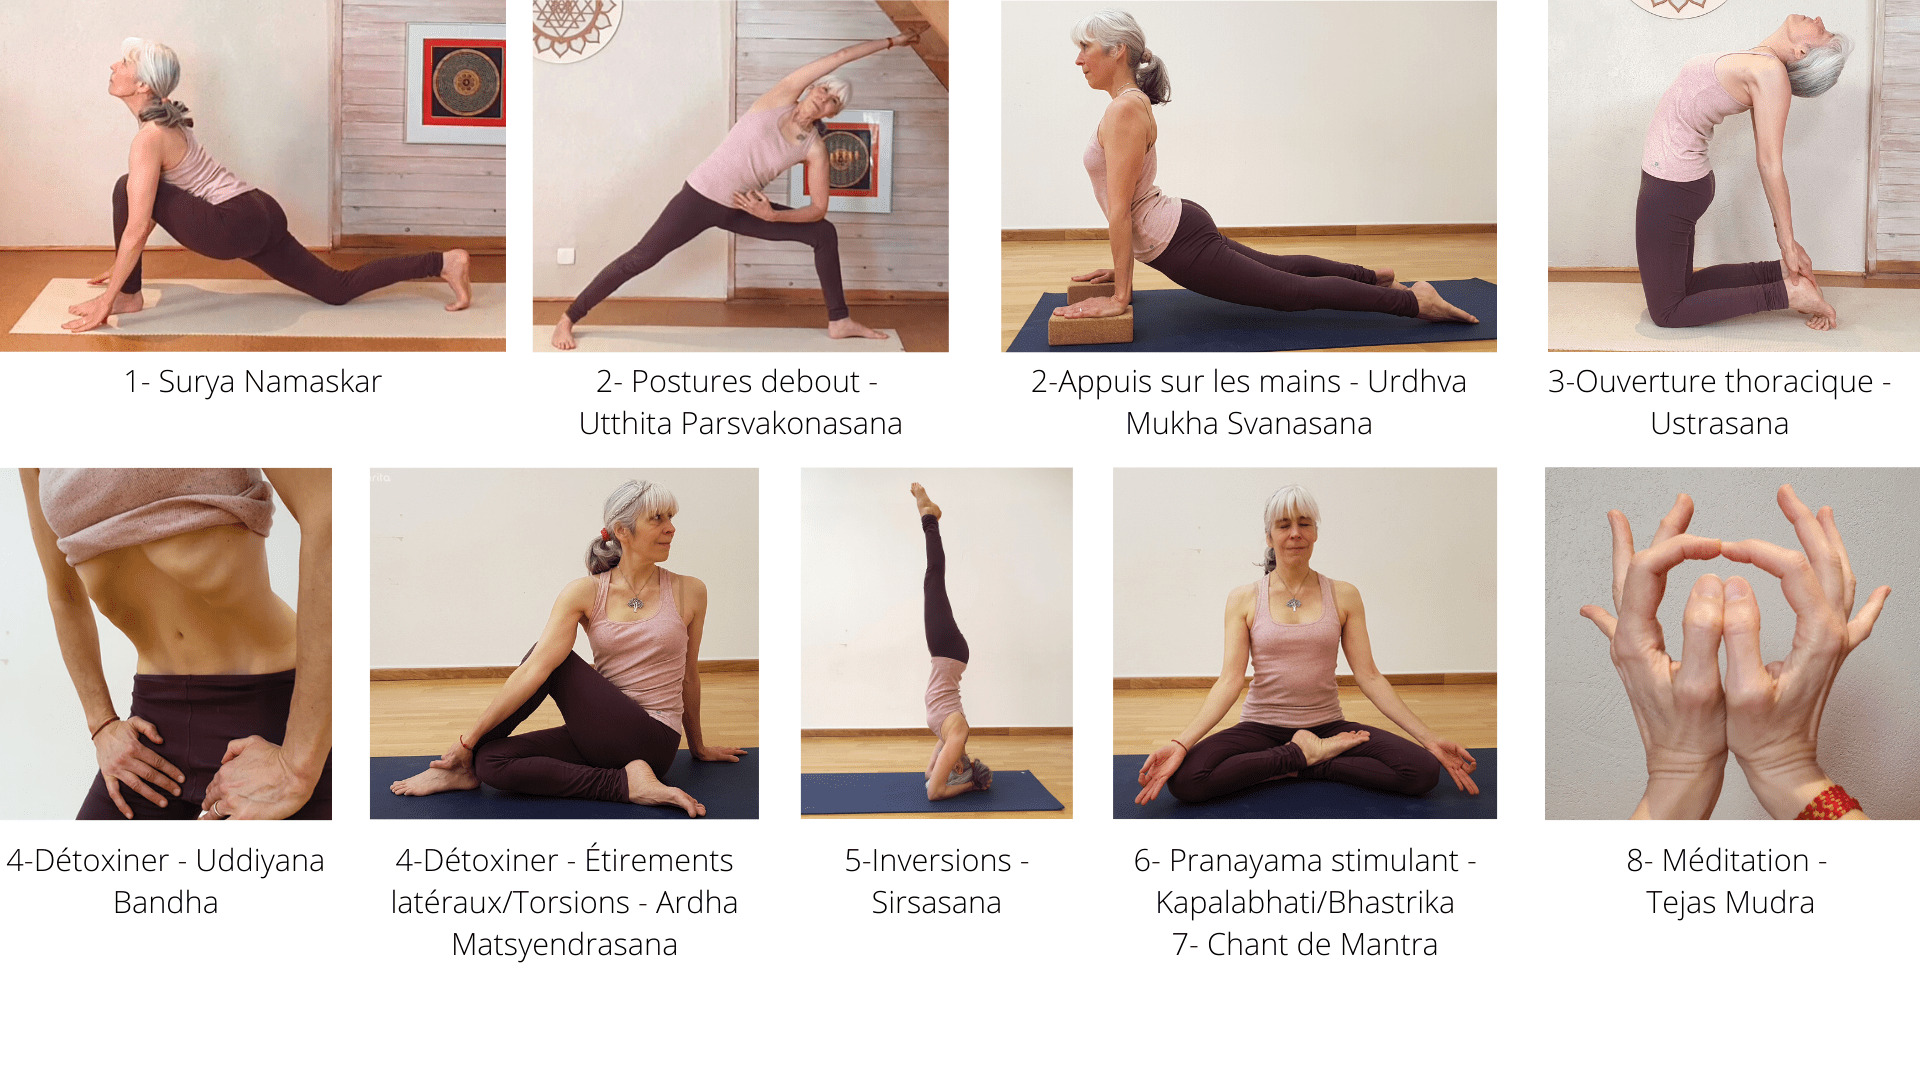 Journal du Yoga Pratique 1920 x 1080 v2